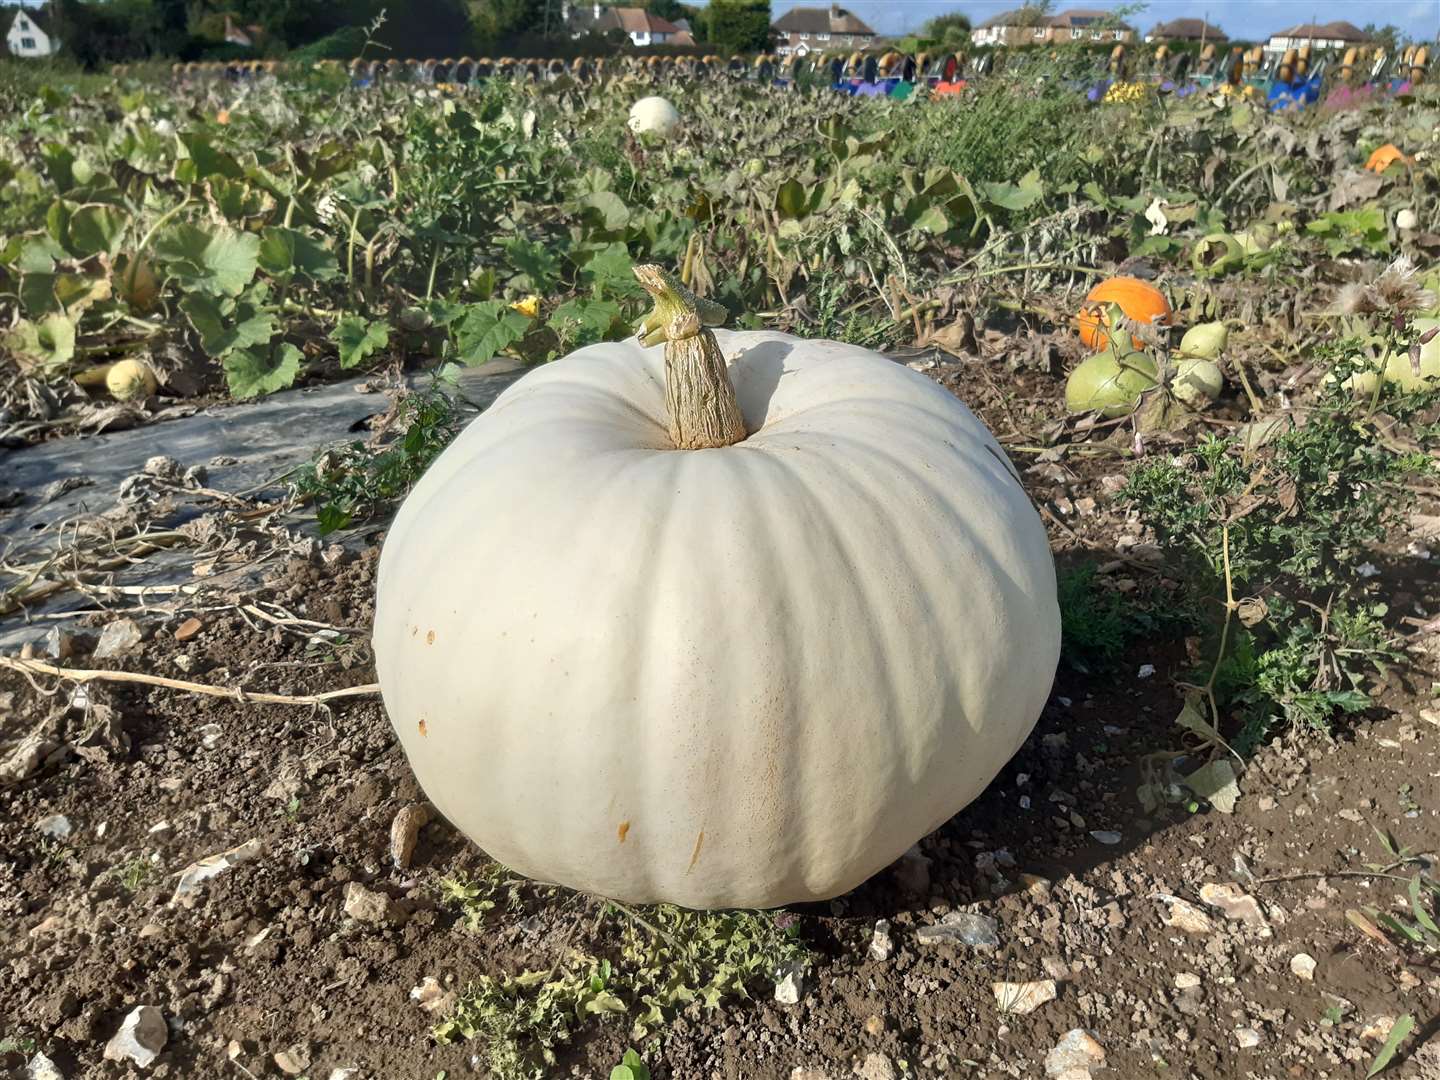 A polarbear pumpkin